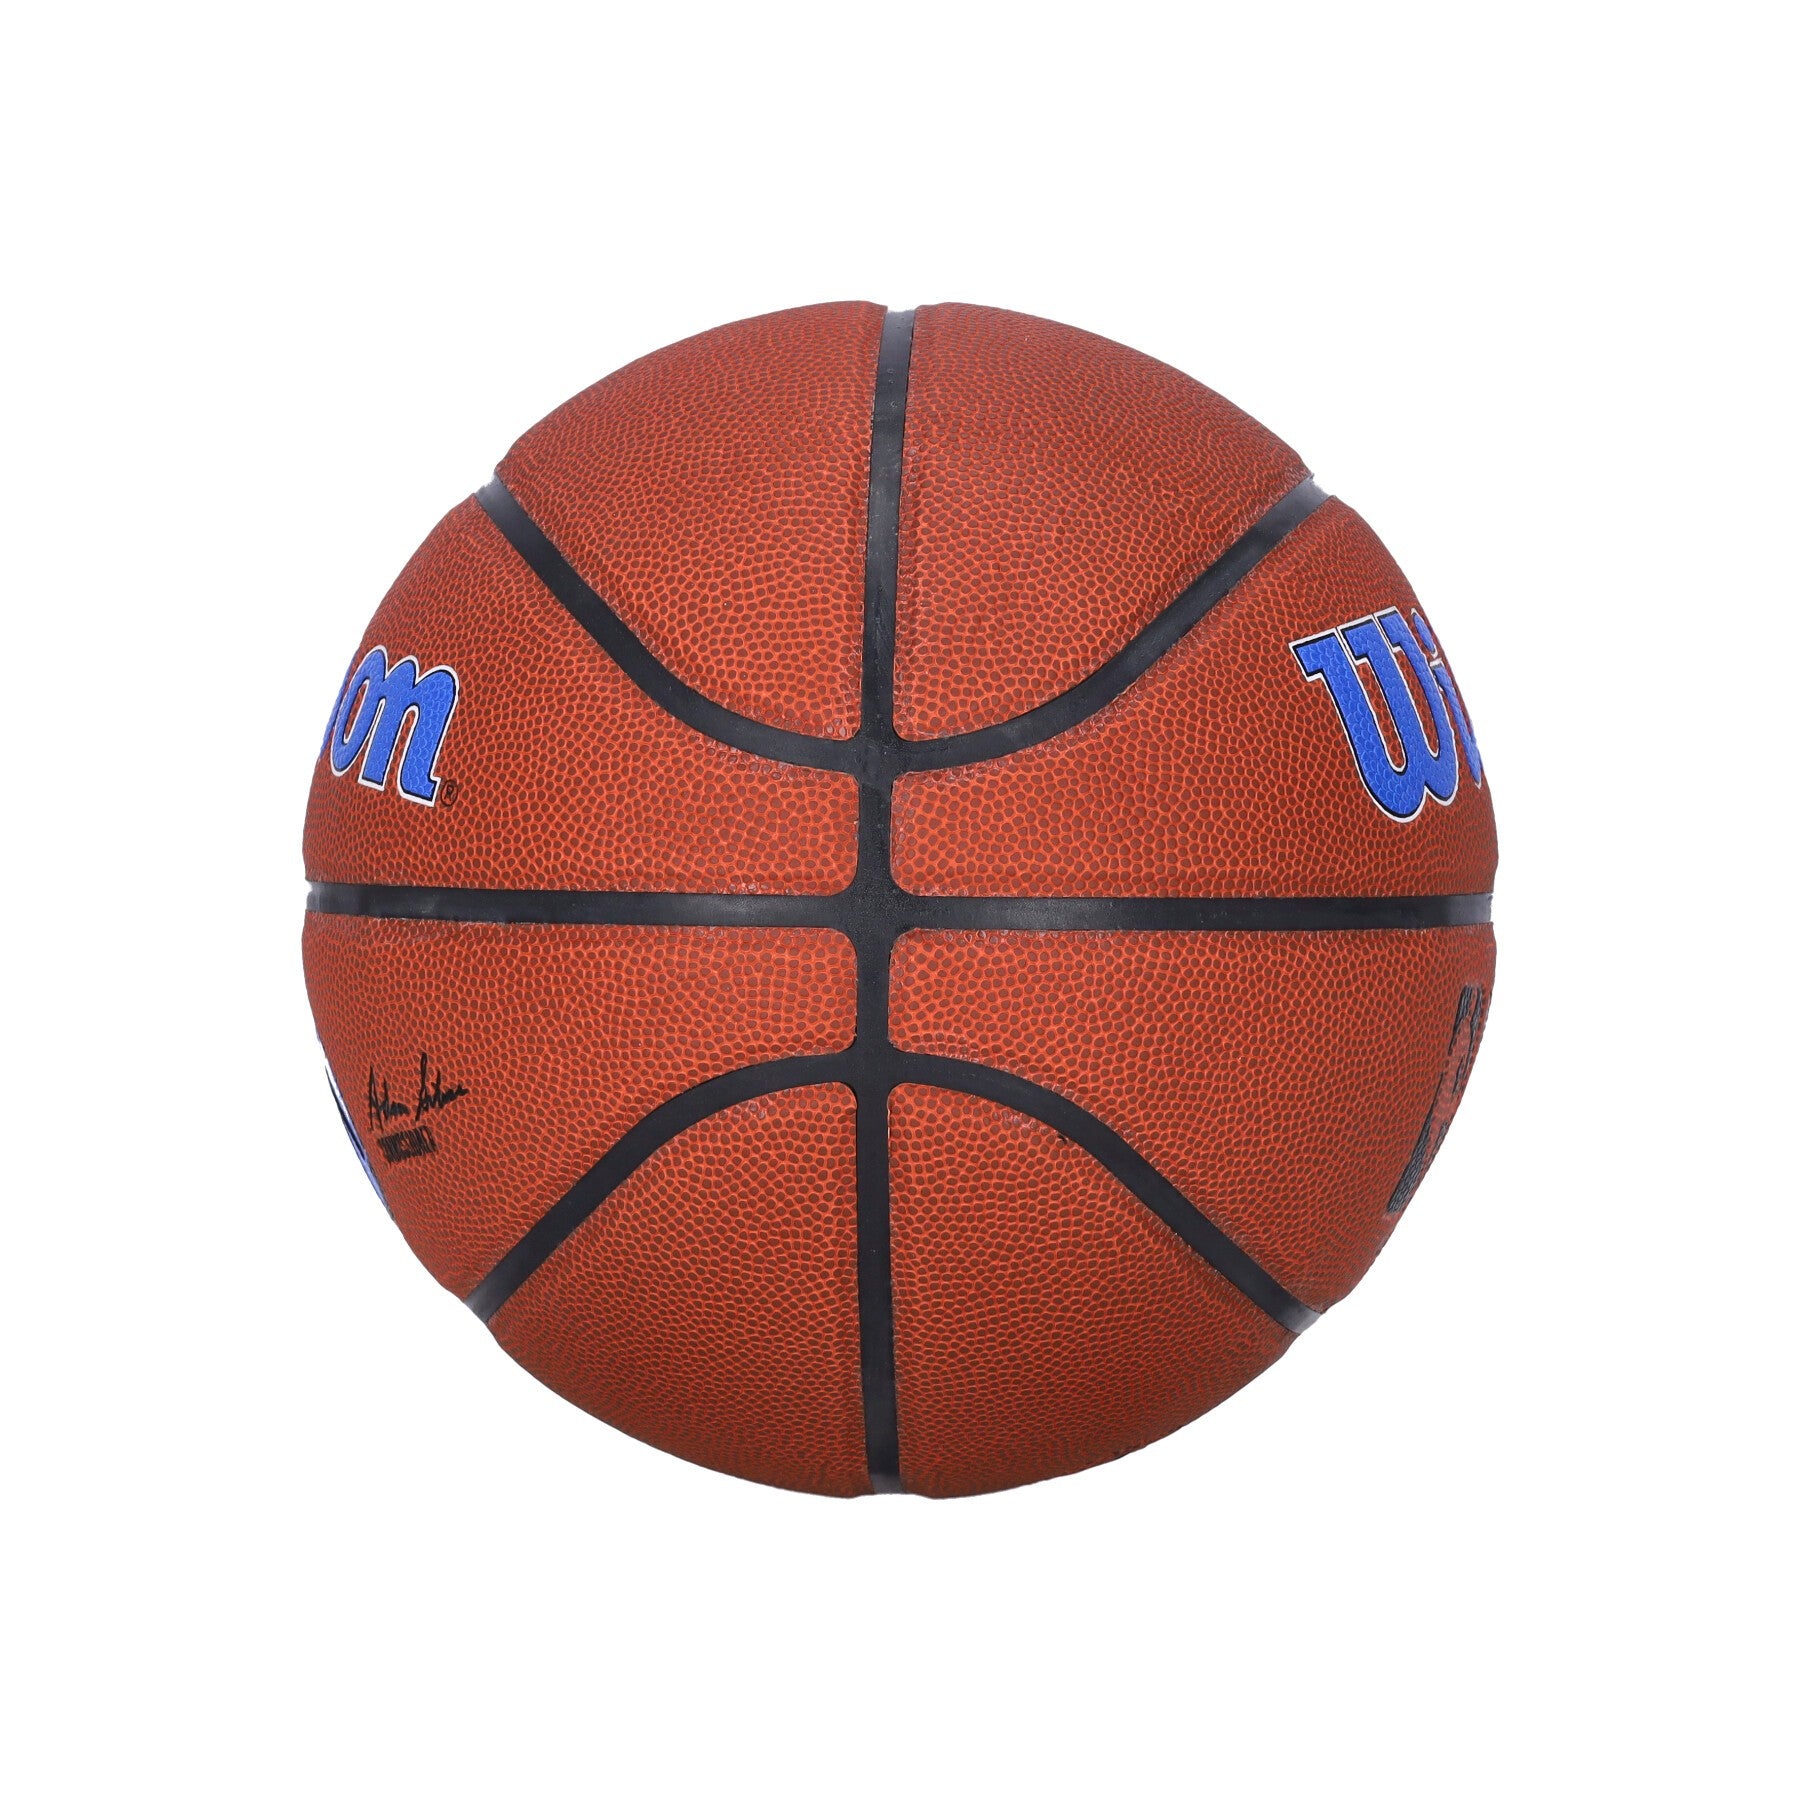 Men's NBA Team Alliance Basketball Size 7 Dalmav Brown/original Team Colors